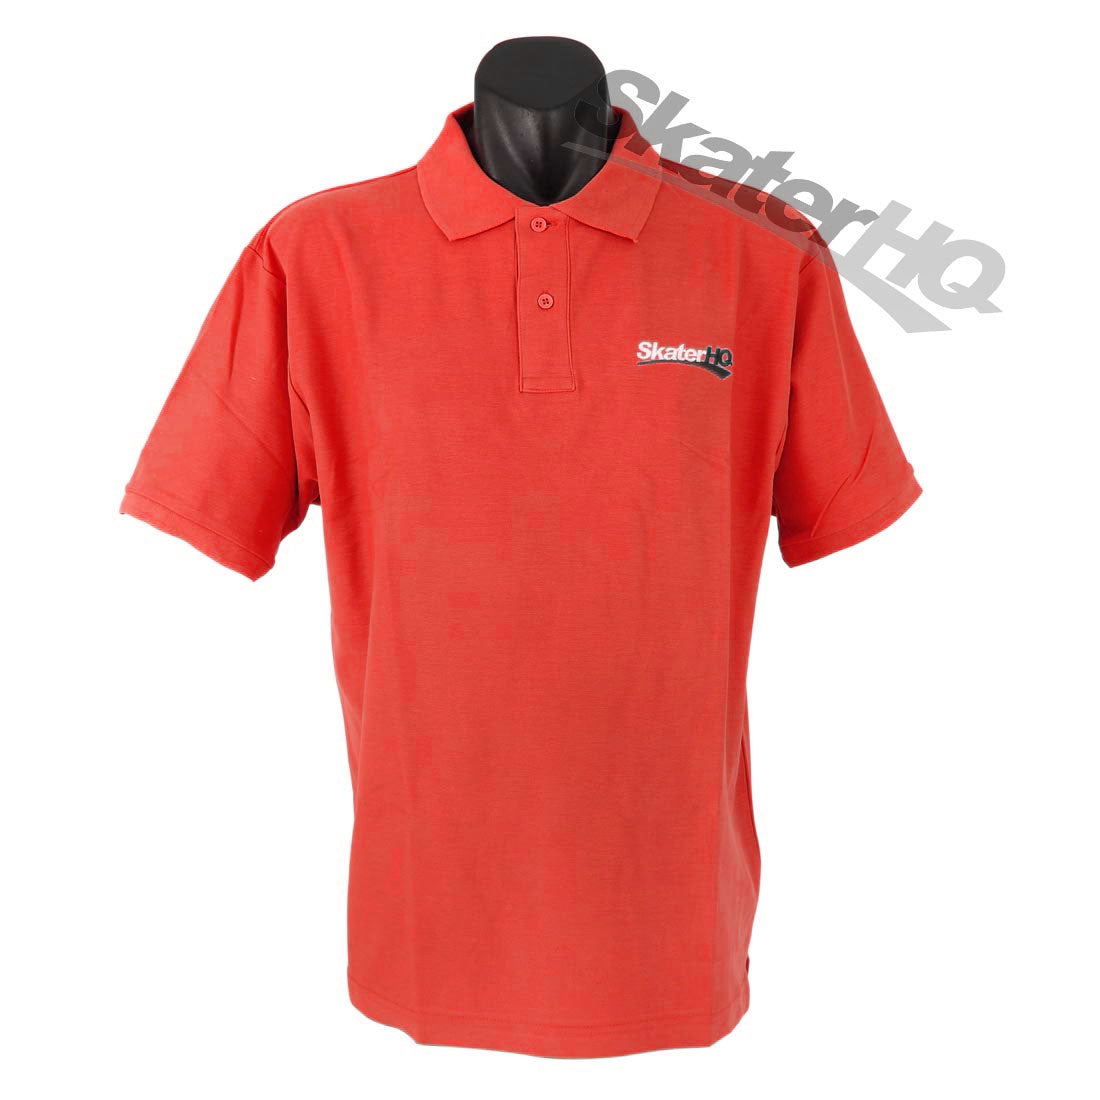 Skater HQ Adult Polo Shirt - Red Apparel Skater HQ Clothing